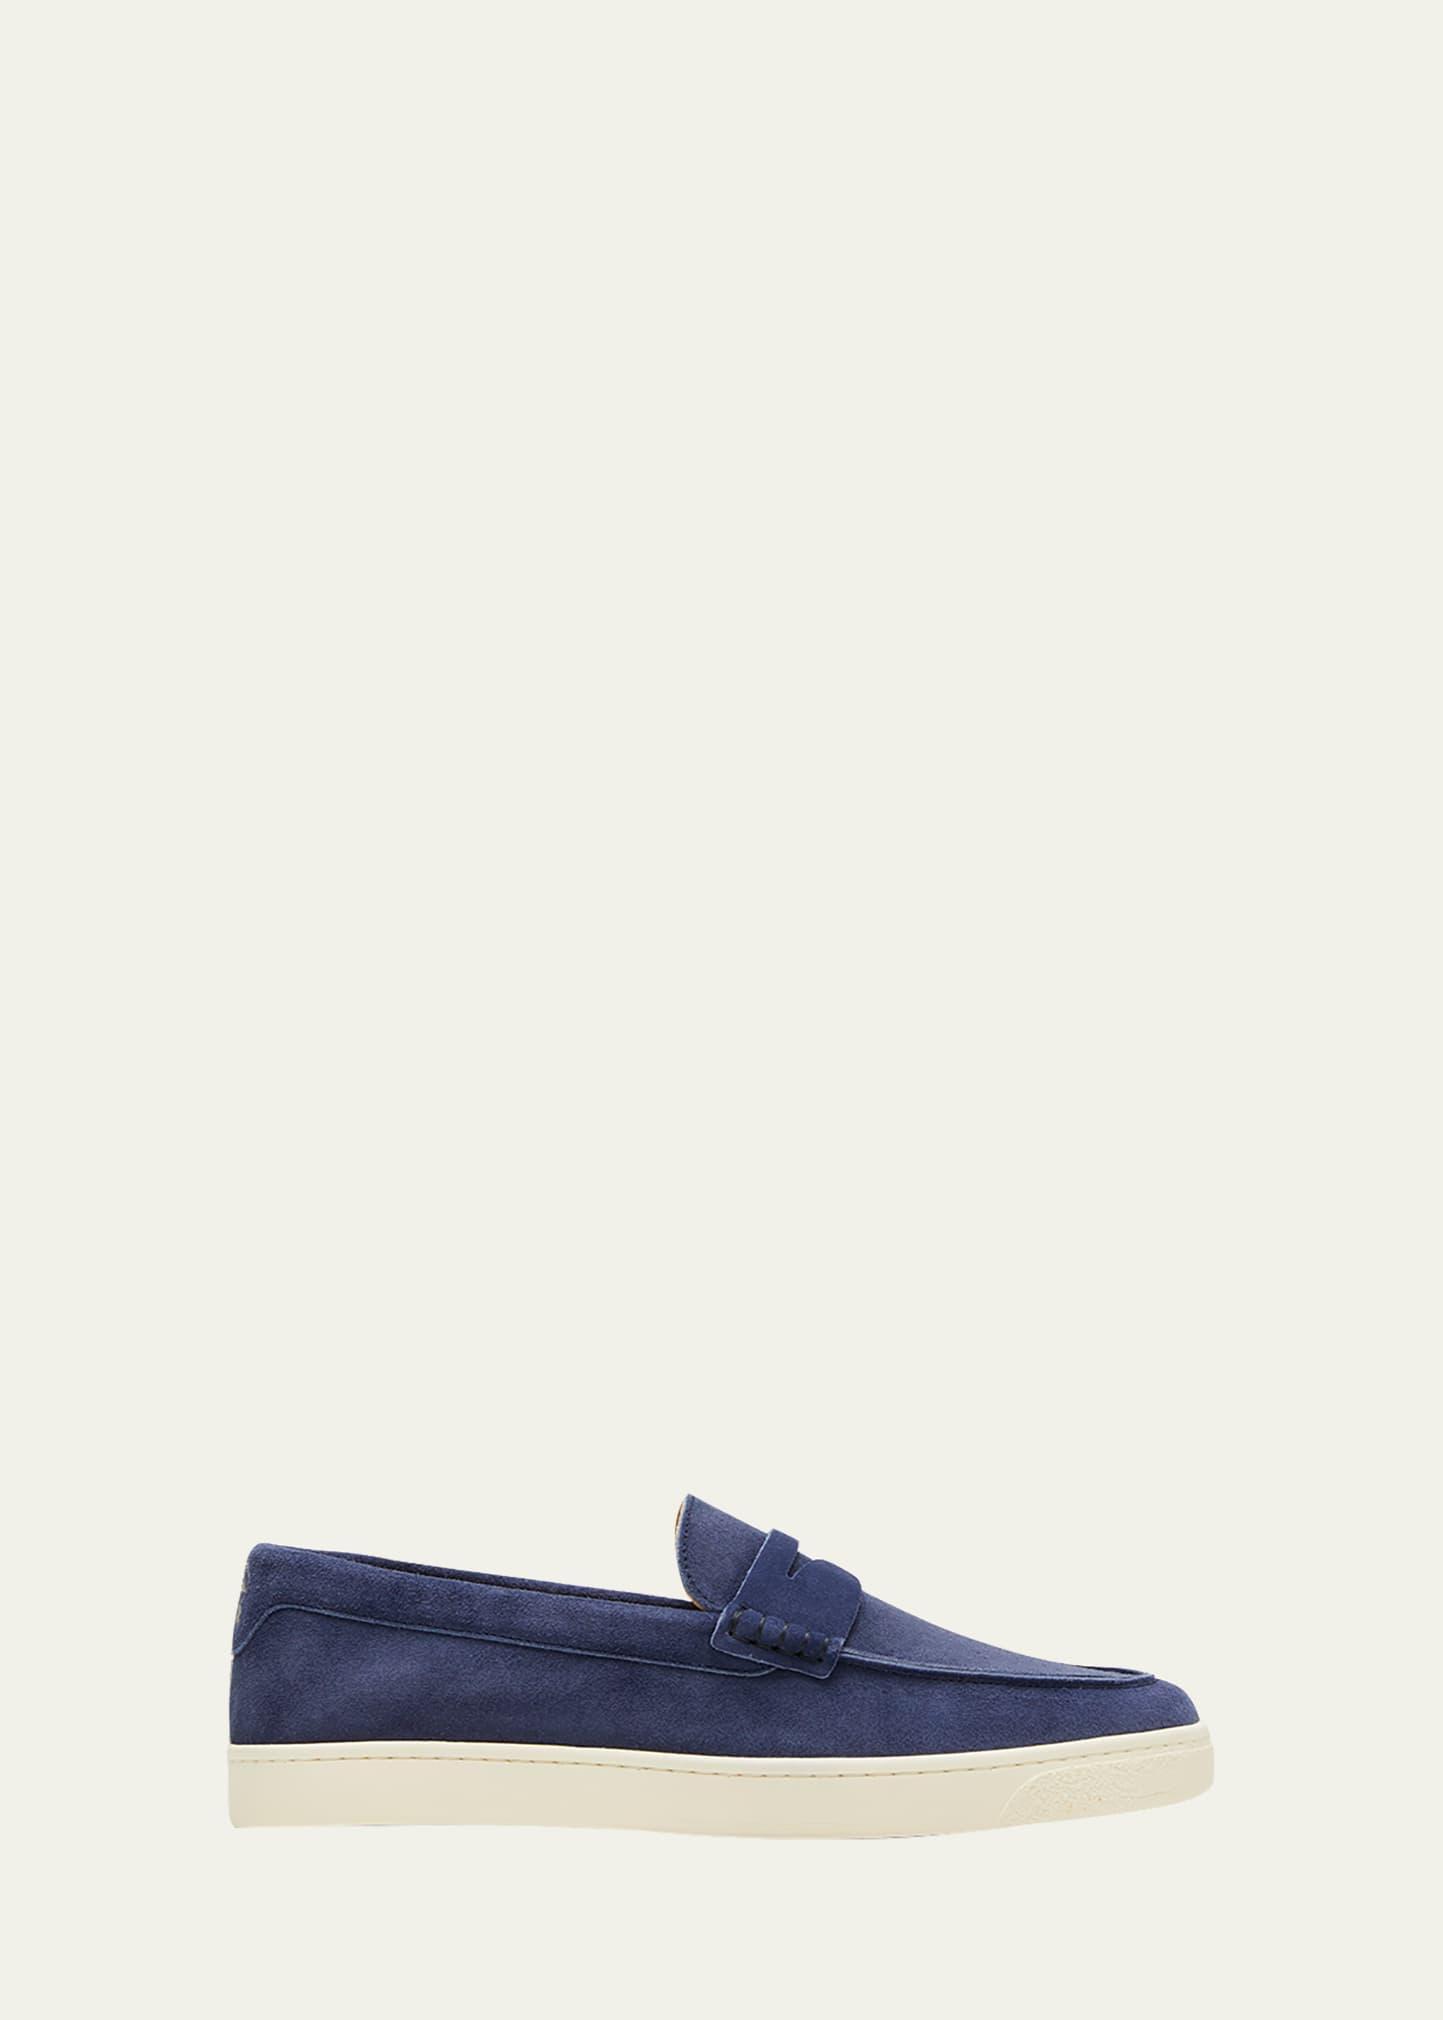 Brunello Cucinelli Suede Slip-On Sneaker Product Image